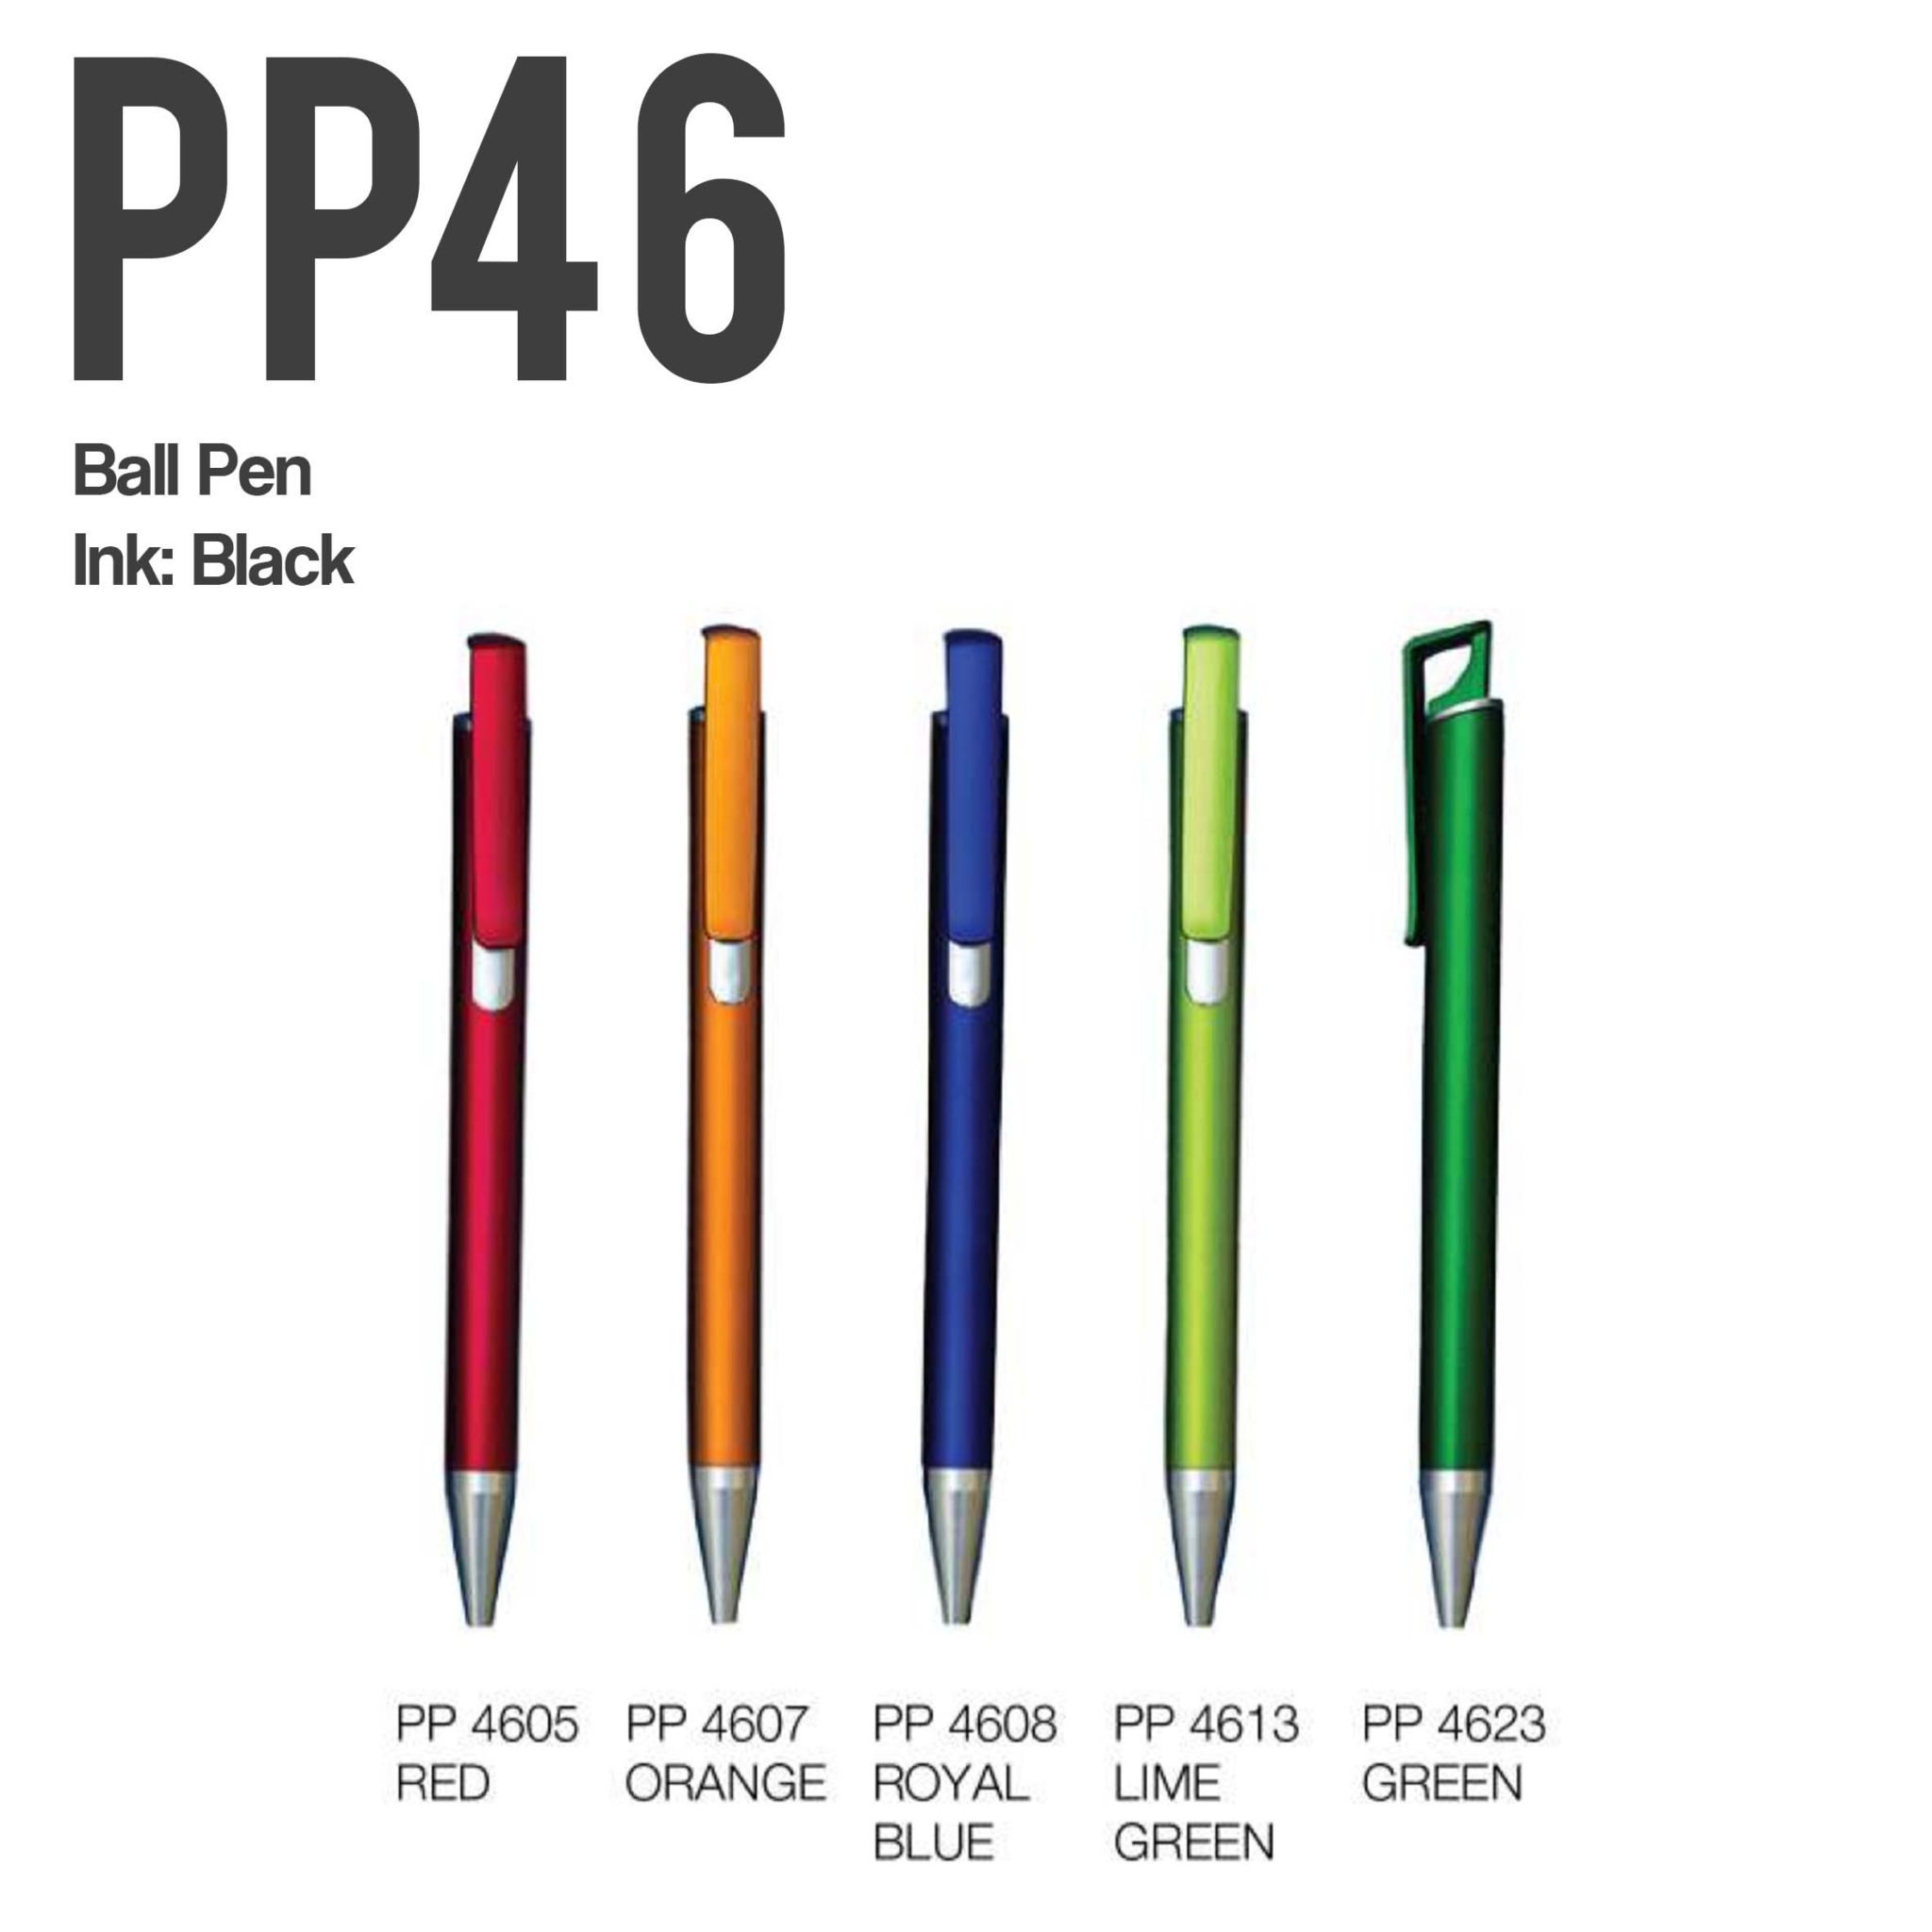 PP46 Plastic pen scaled